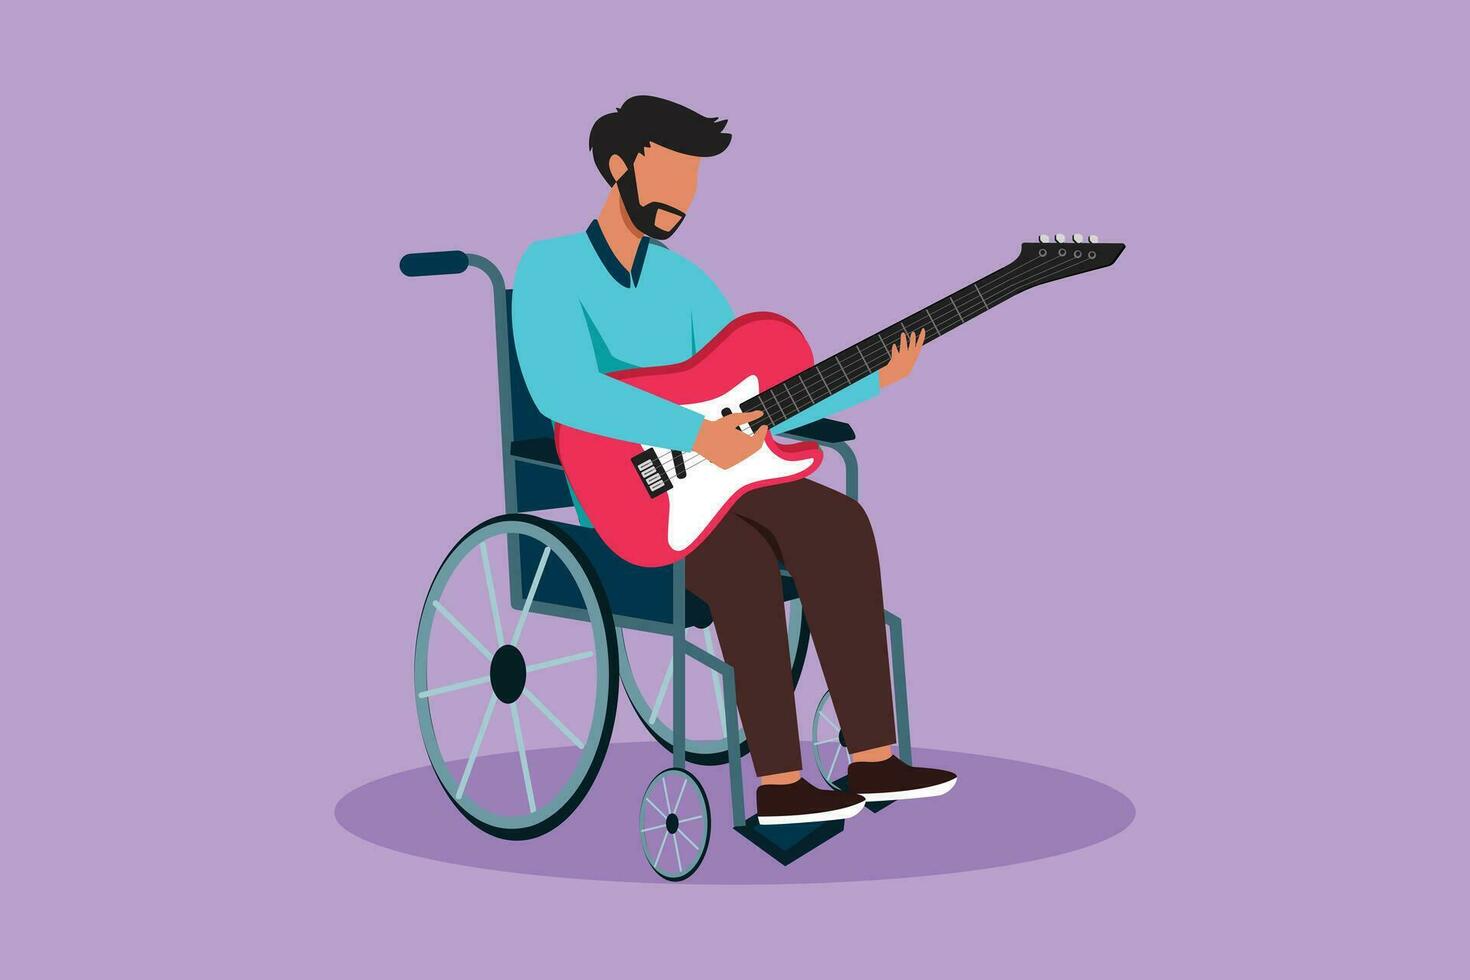 dibujos animados plano estilo dibujo de árabe masculino sentar silla de ruedas jugando eléctrico guitarra, musical actuación, canta canción. físicamente desactivado. persona en hospital habitación pabellón. gráfico diseño vector ilustración